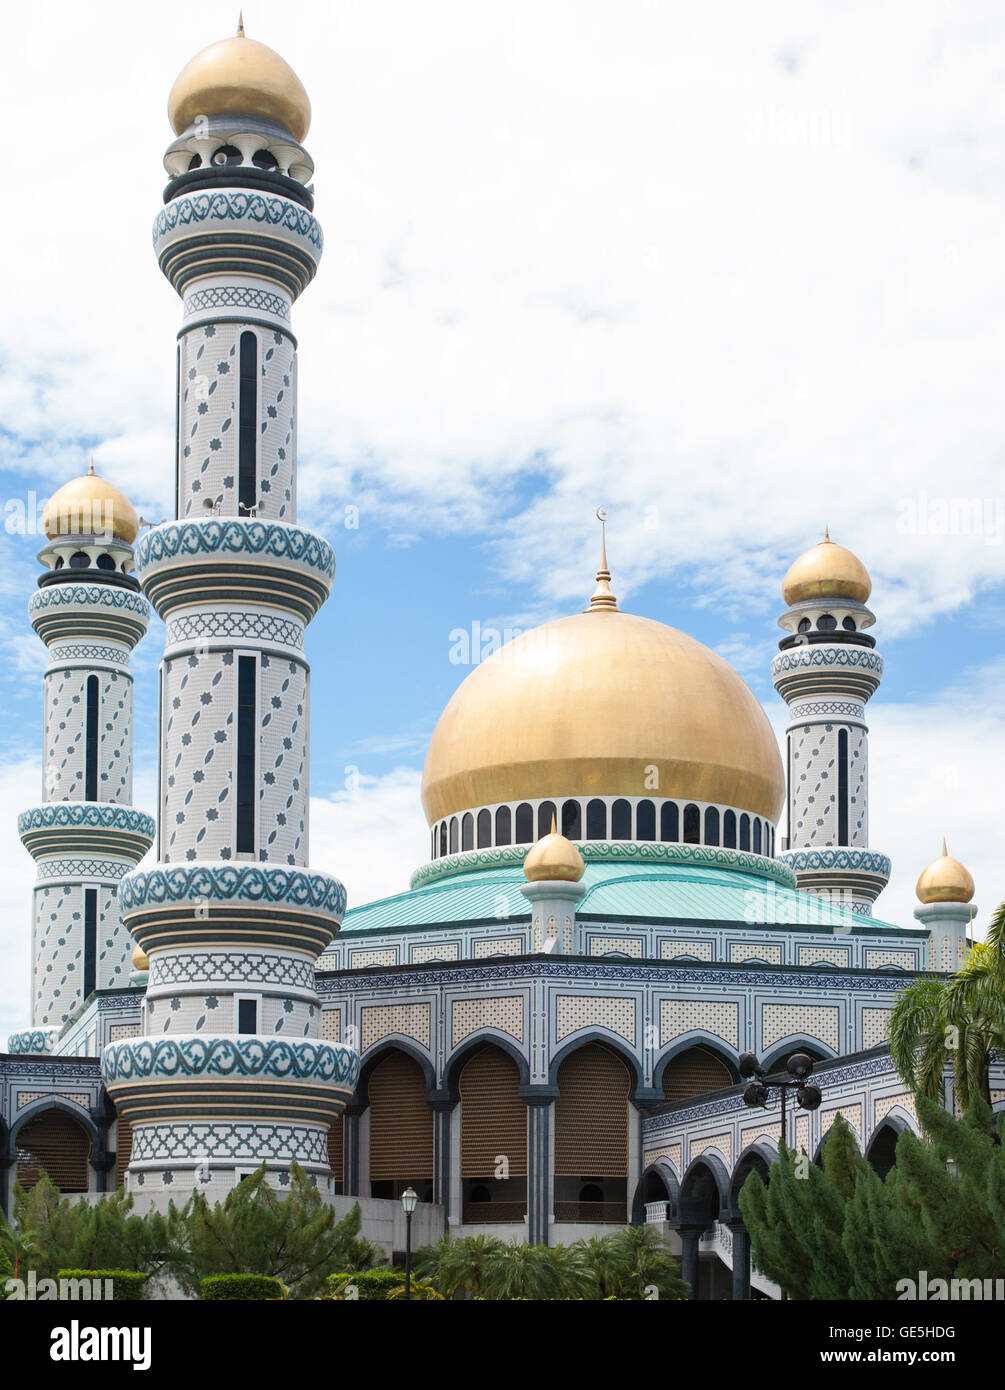 Palace in Bandar Seri Begawan, Brunei Stock Photo